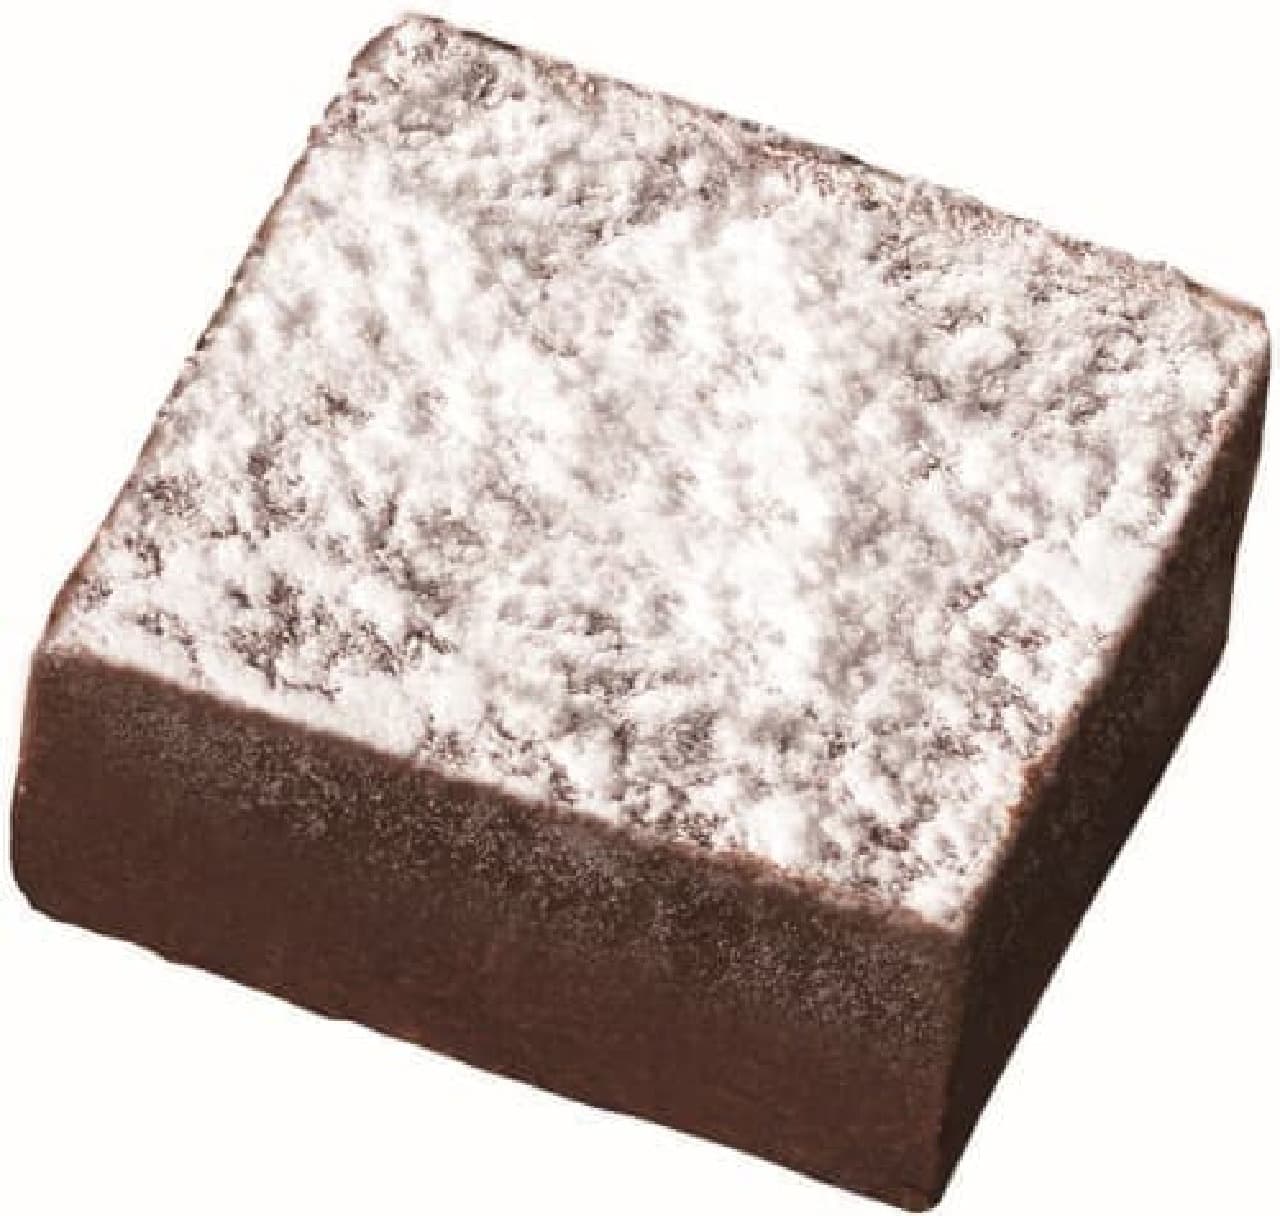 Bourbon "Powdered Snow Chocolat Deep Cacao"